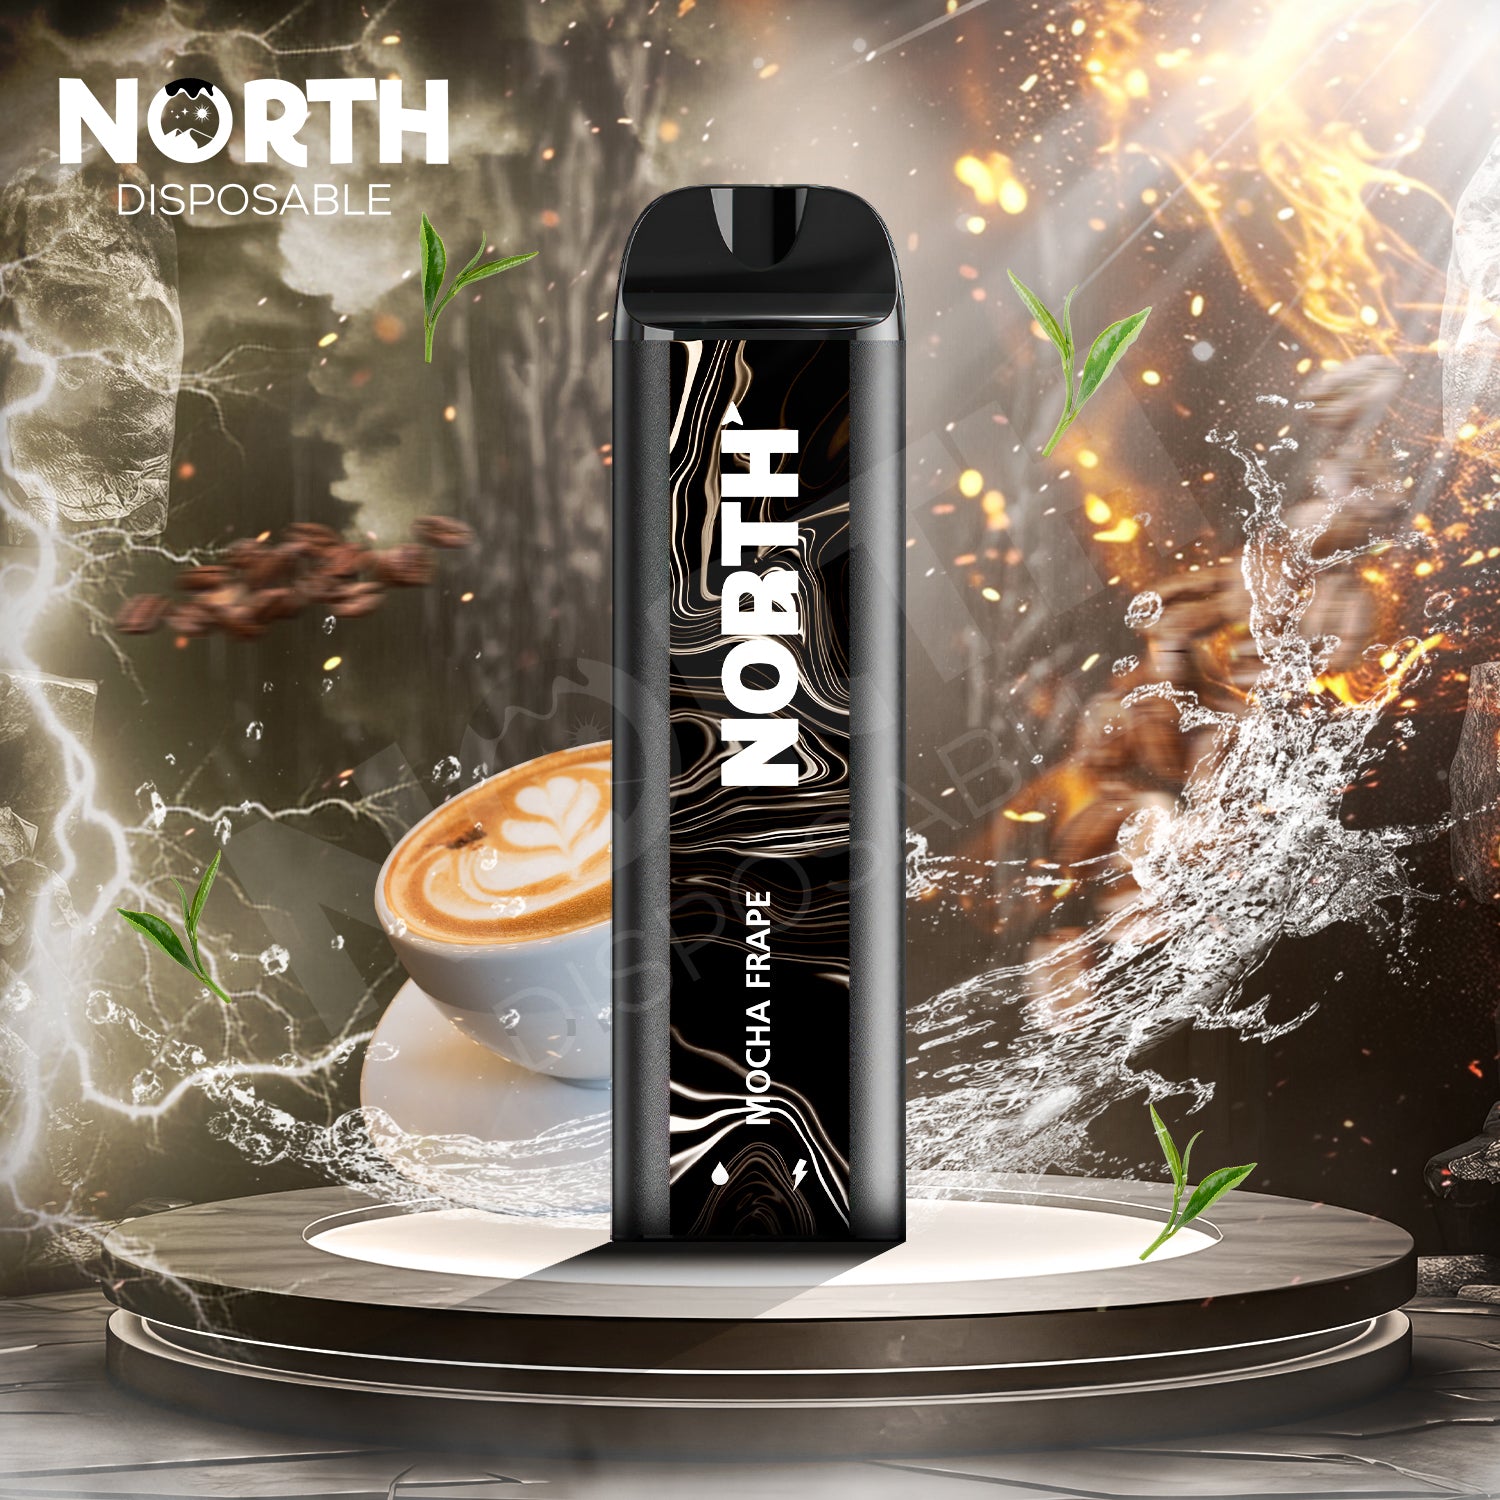 North 5000 Disposable 3% - Mocha Frappe